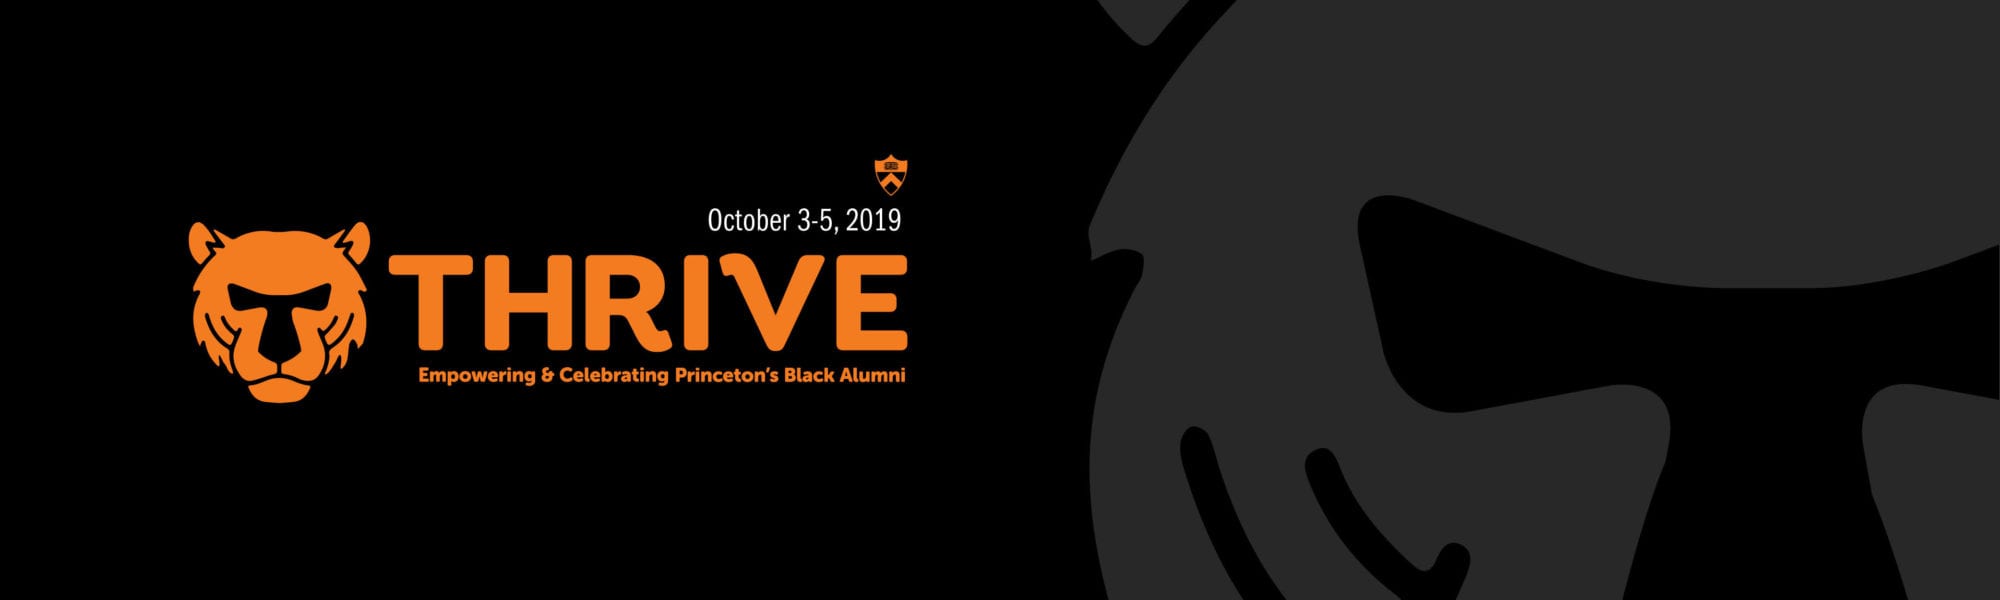 THRIVE: Celebrating Princeton's Black Alumni, October 3-5, 2019